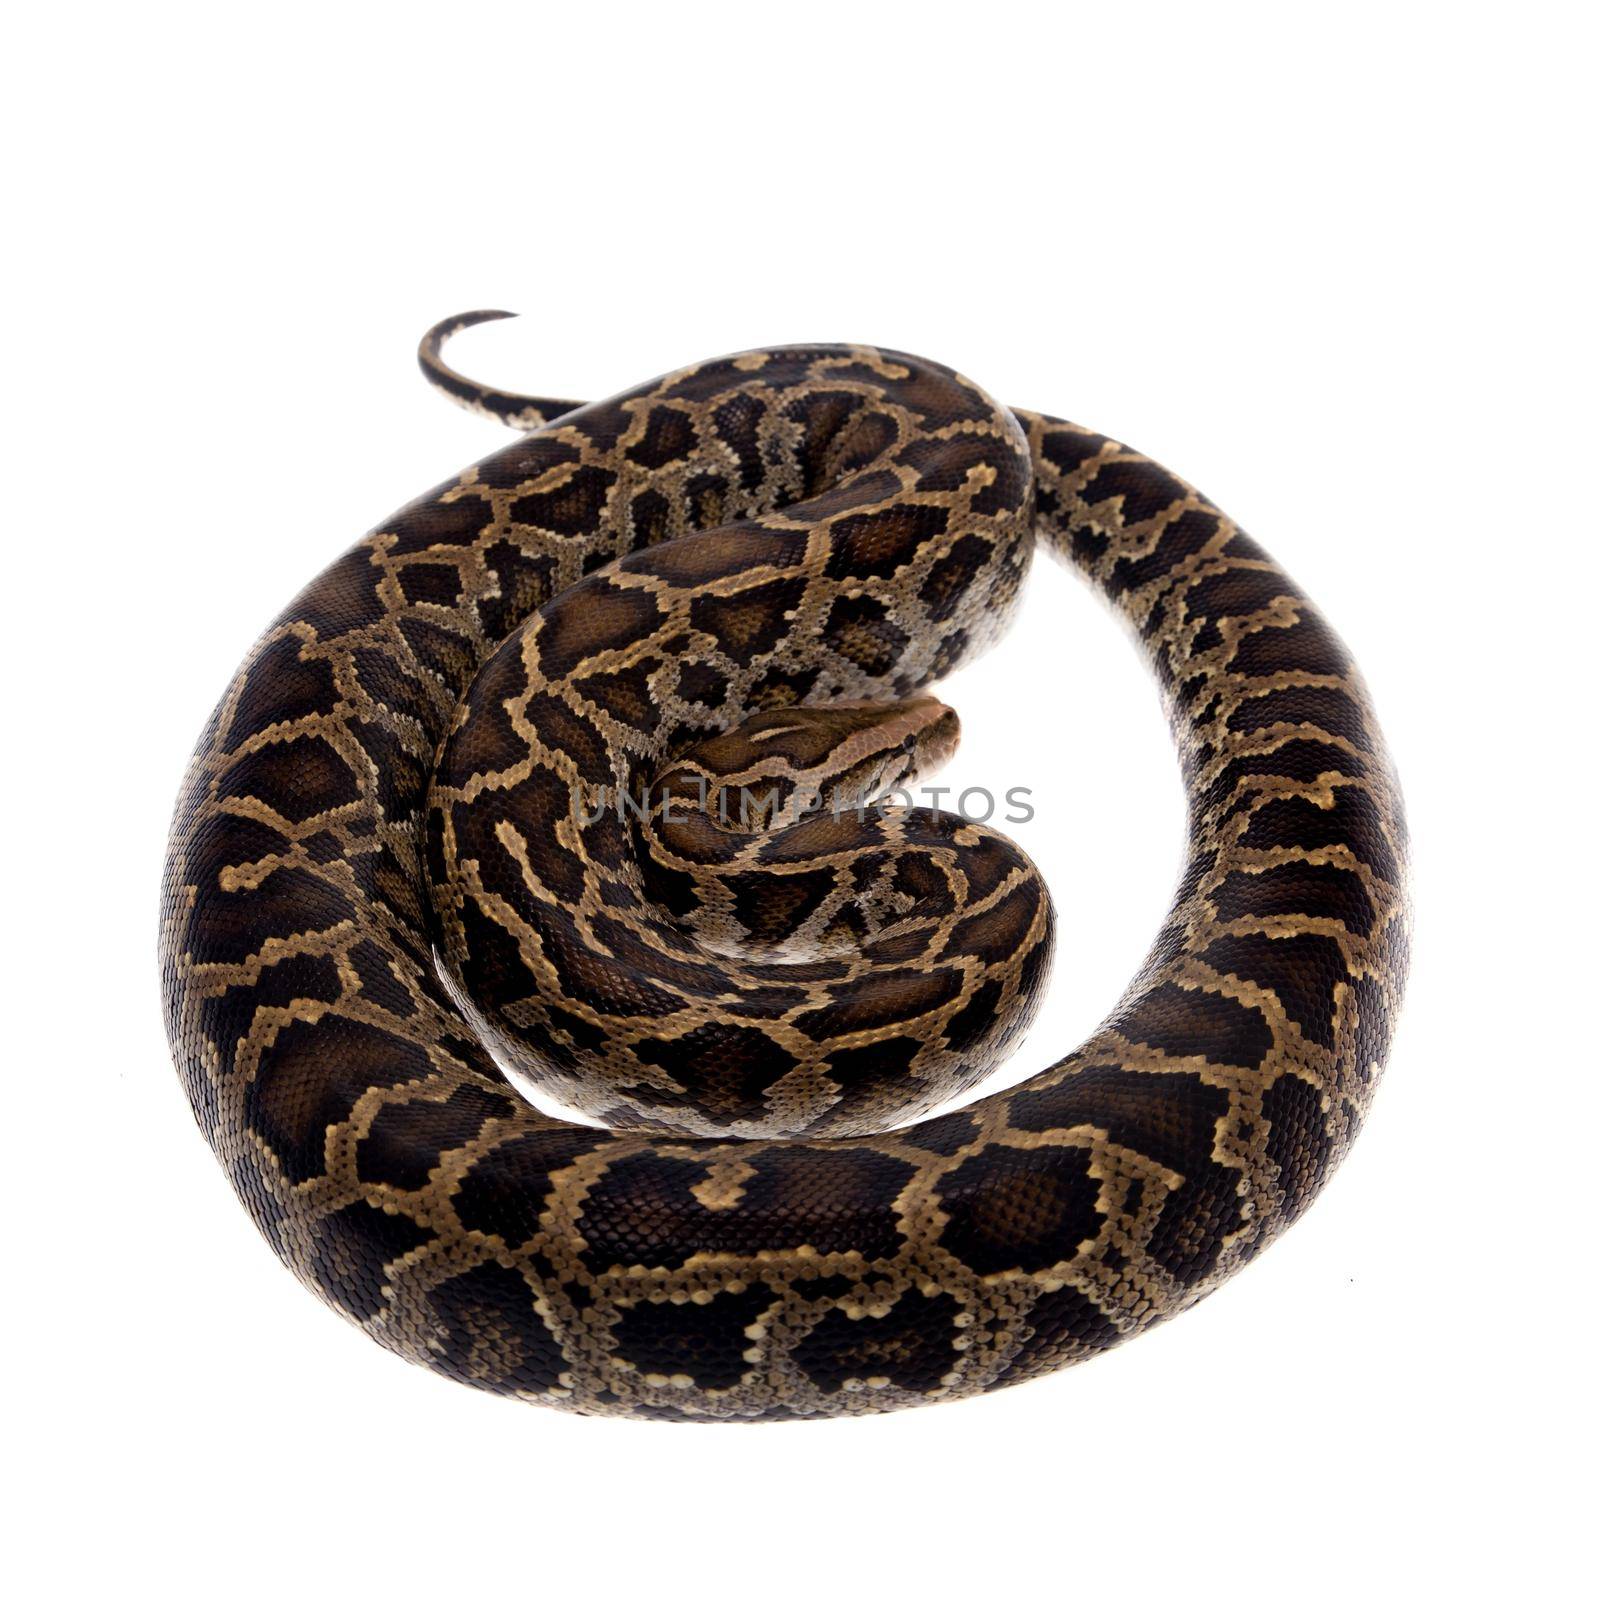 Burmese python on white background by RosaJay